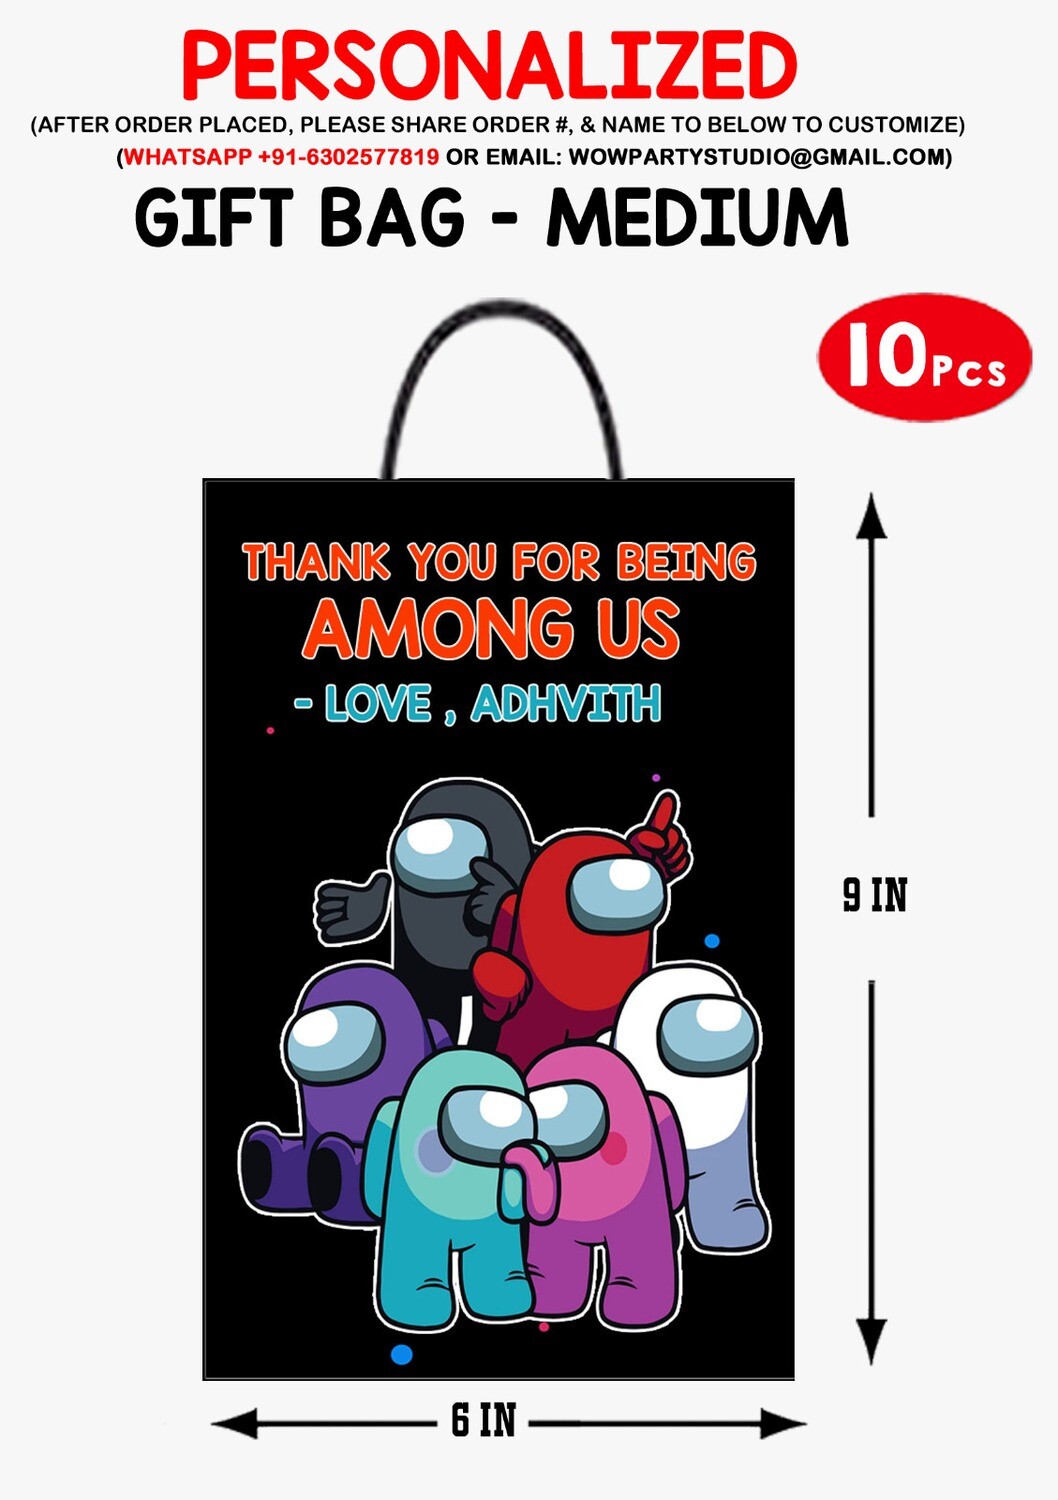 Among Us Gift Bag - Medium (10 Pcs)